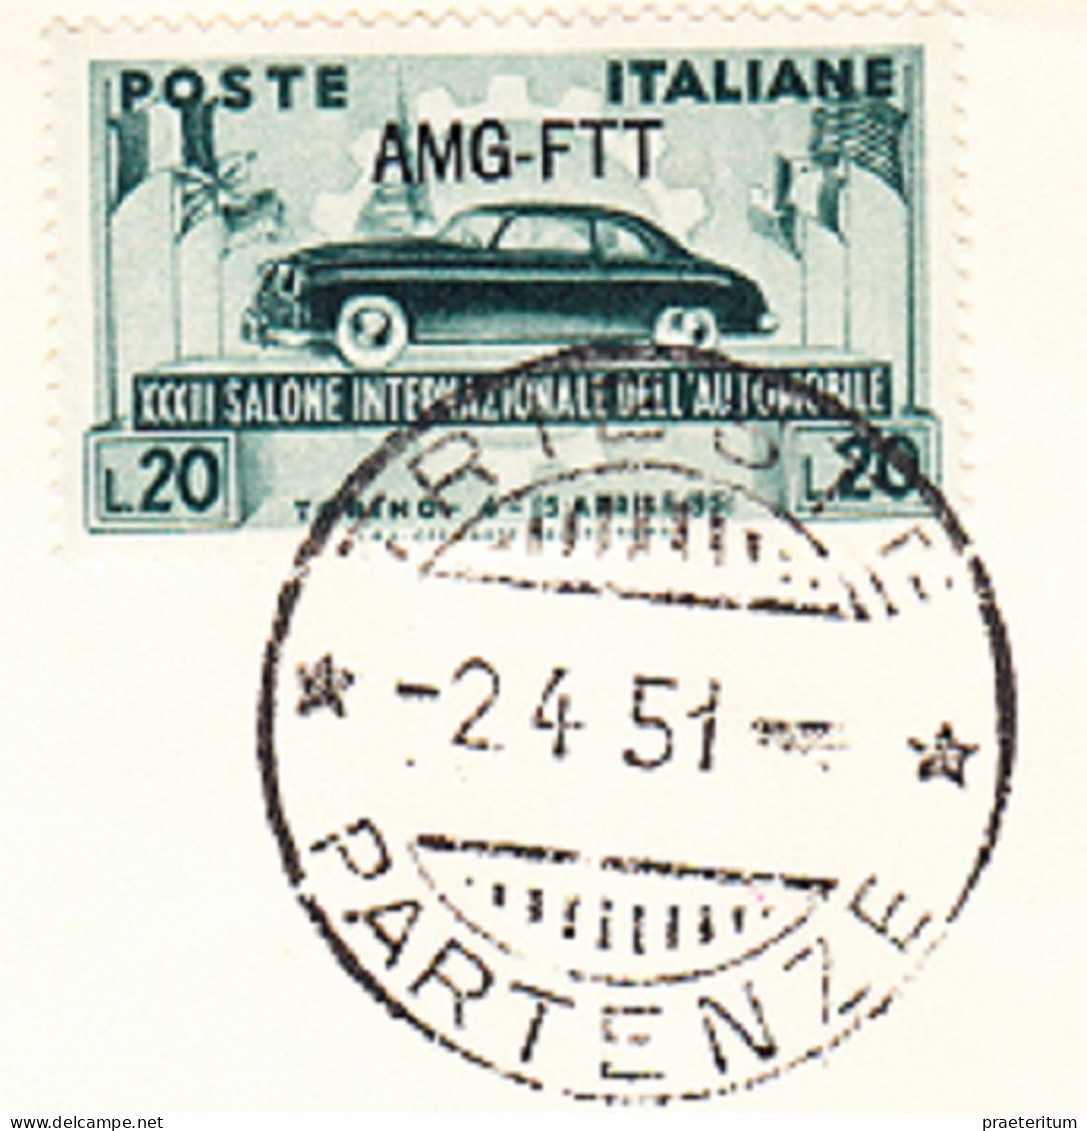 ITALIA Trieste Zone A - Cat, No. 86 FDC - 2.4.1951 - Poststempel